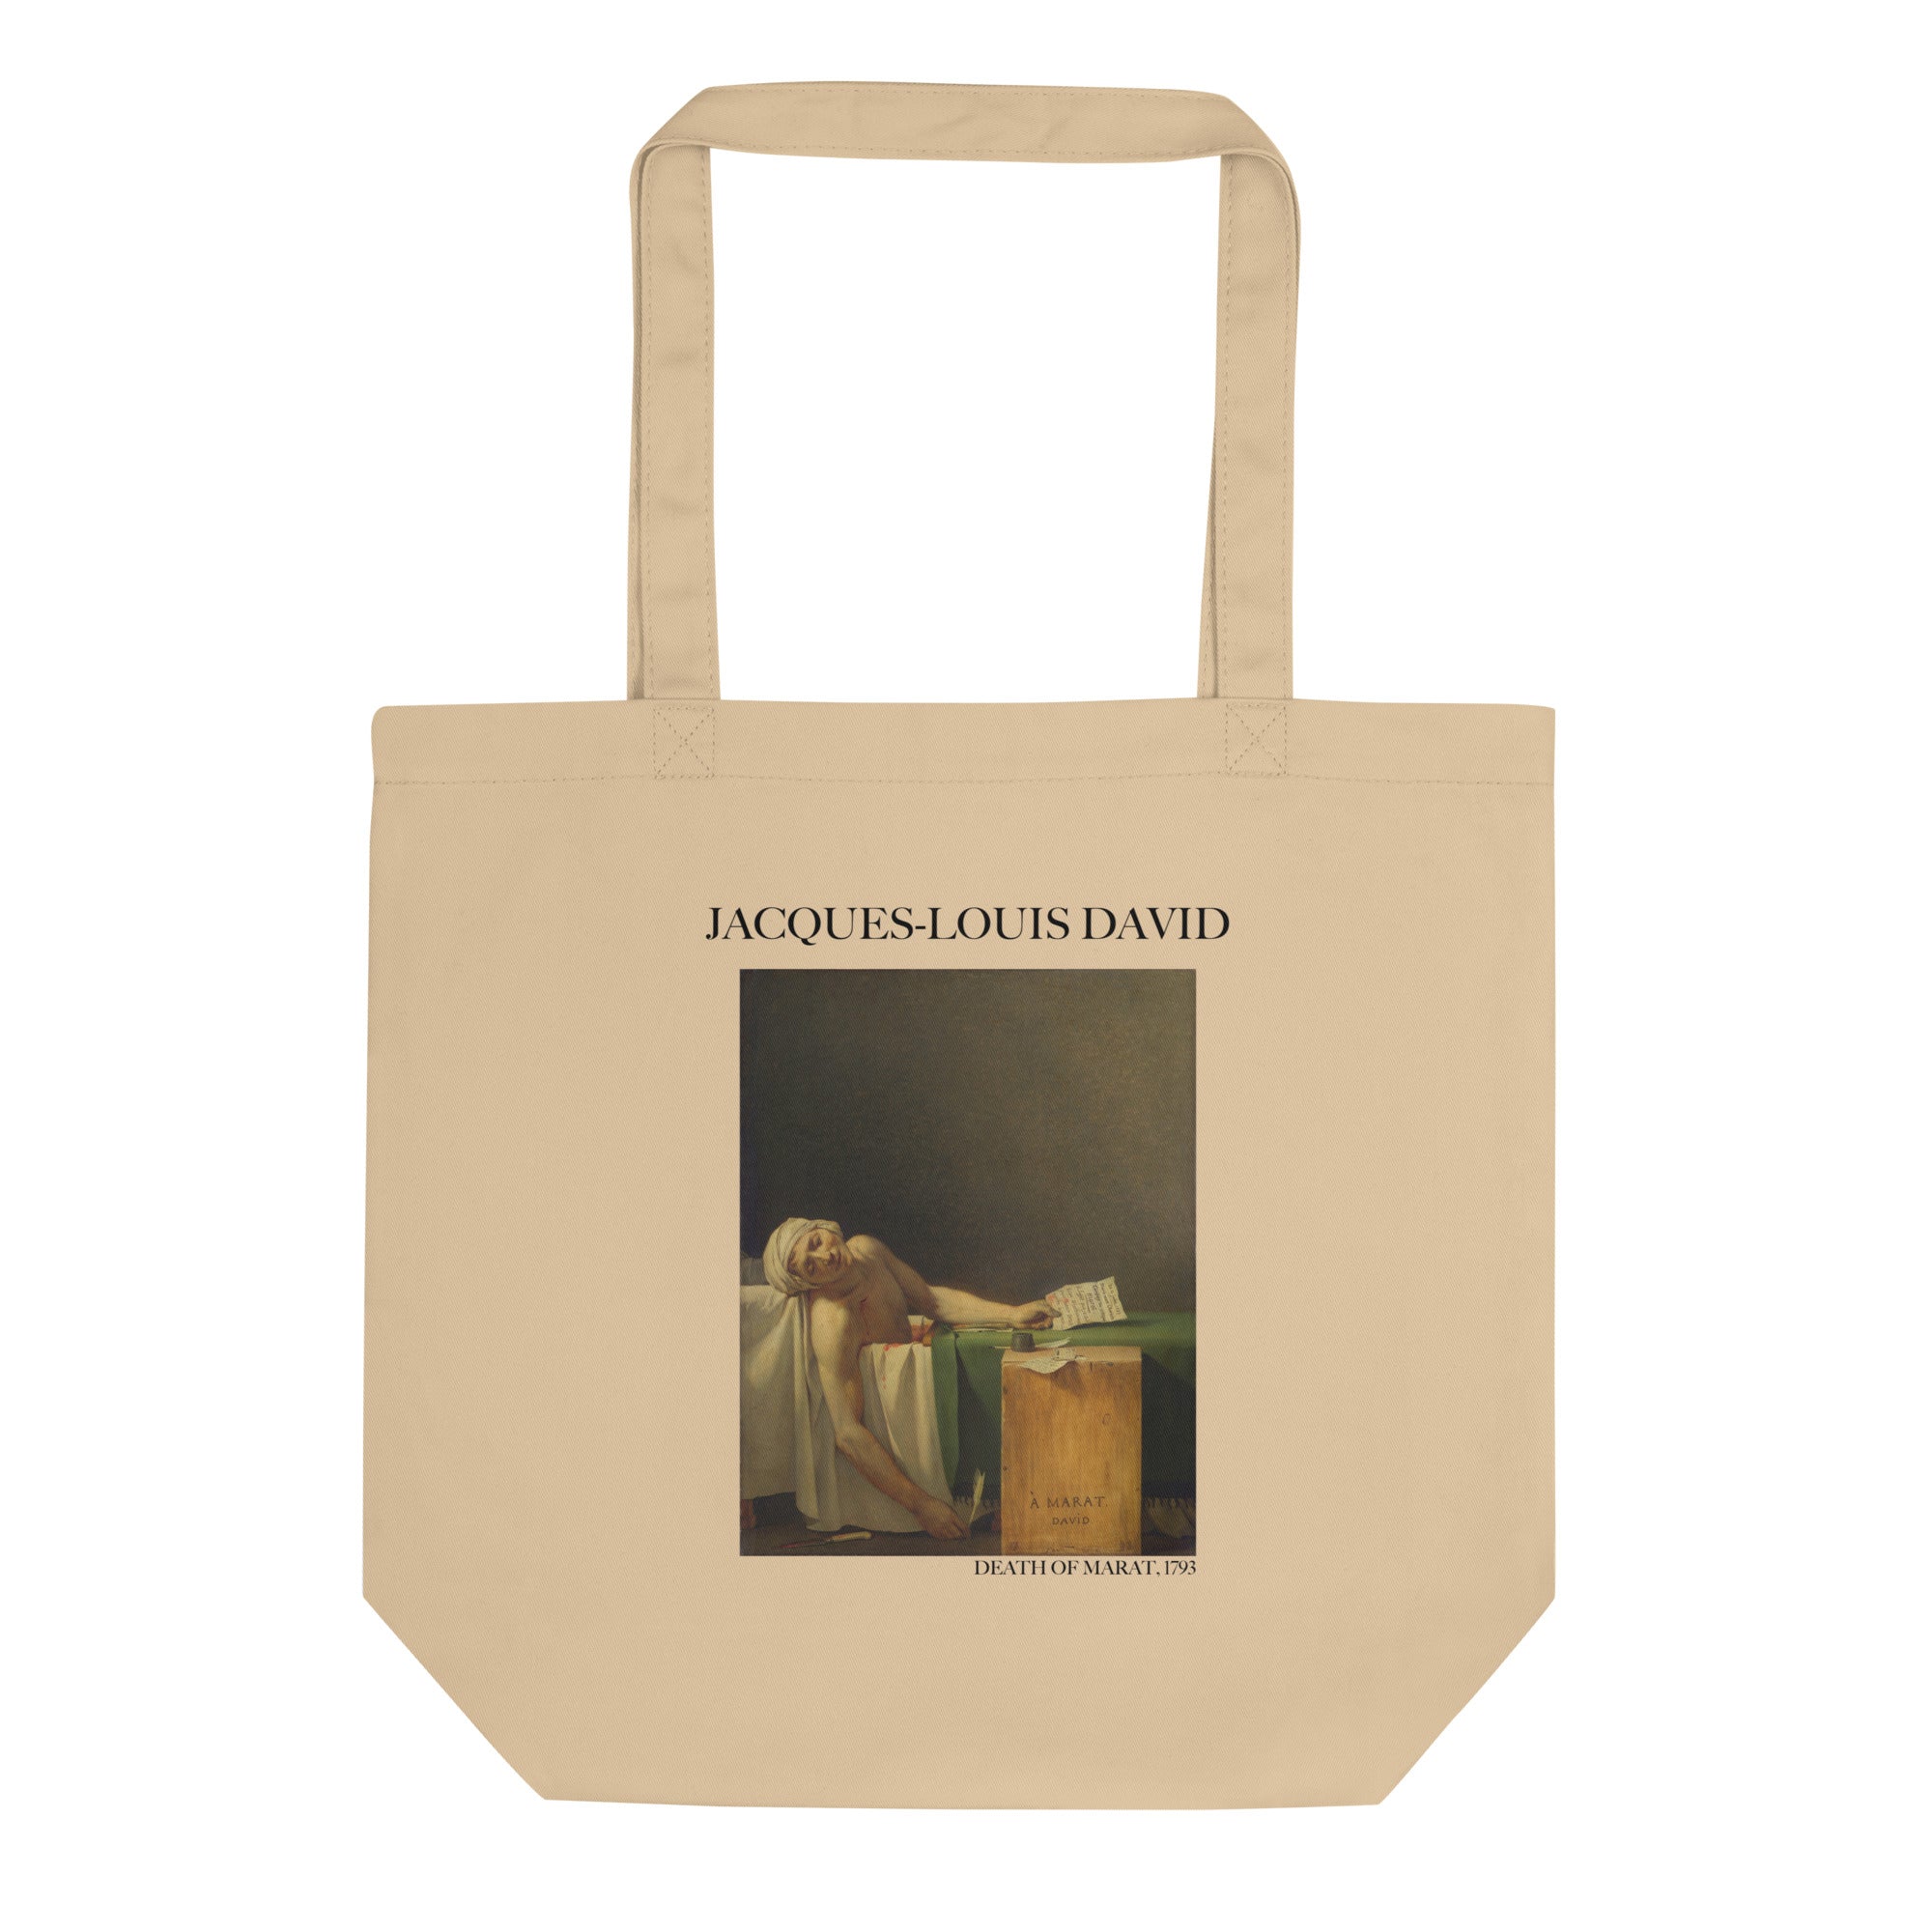 Jacques-Louis David 'Death of Marat' Famous Painting Totebag | Eco Friendly Art Tote Bag